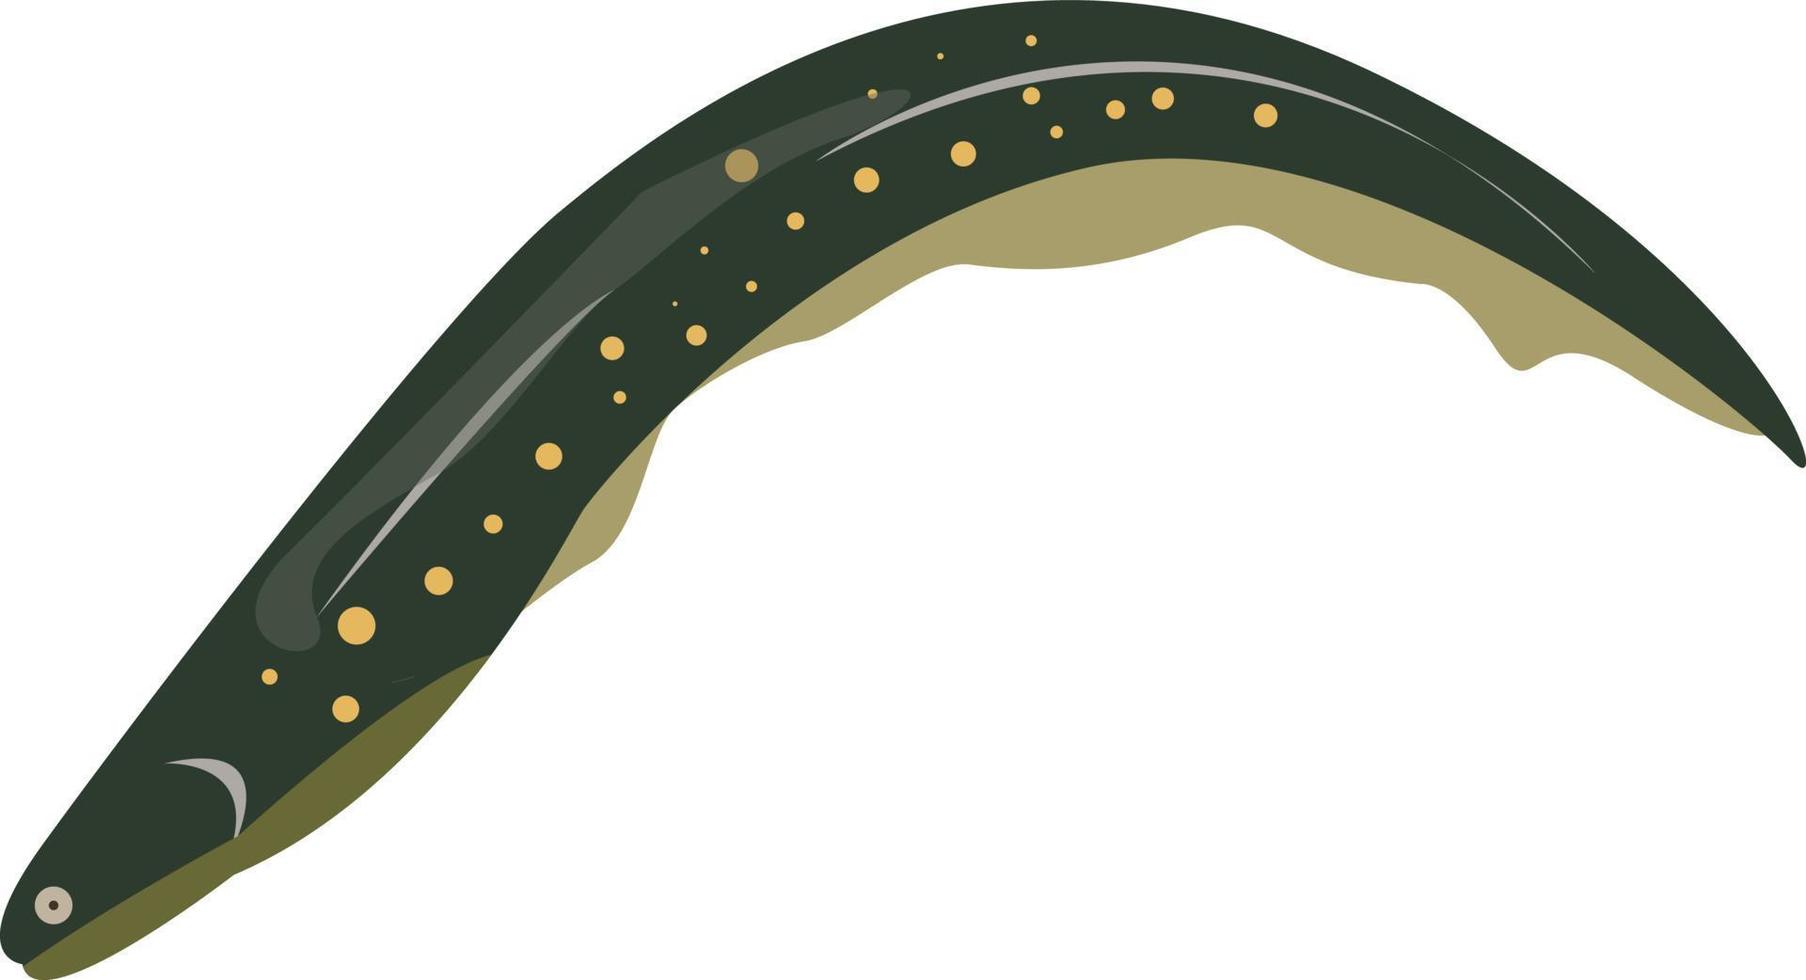 Green eel, illustration, vector on white background